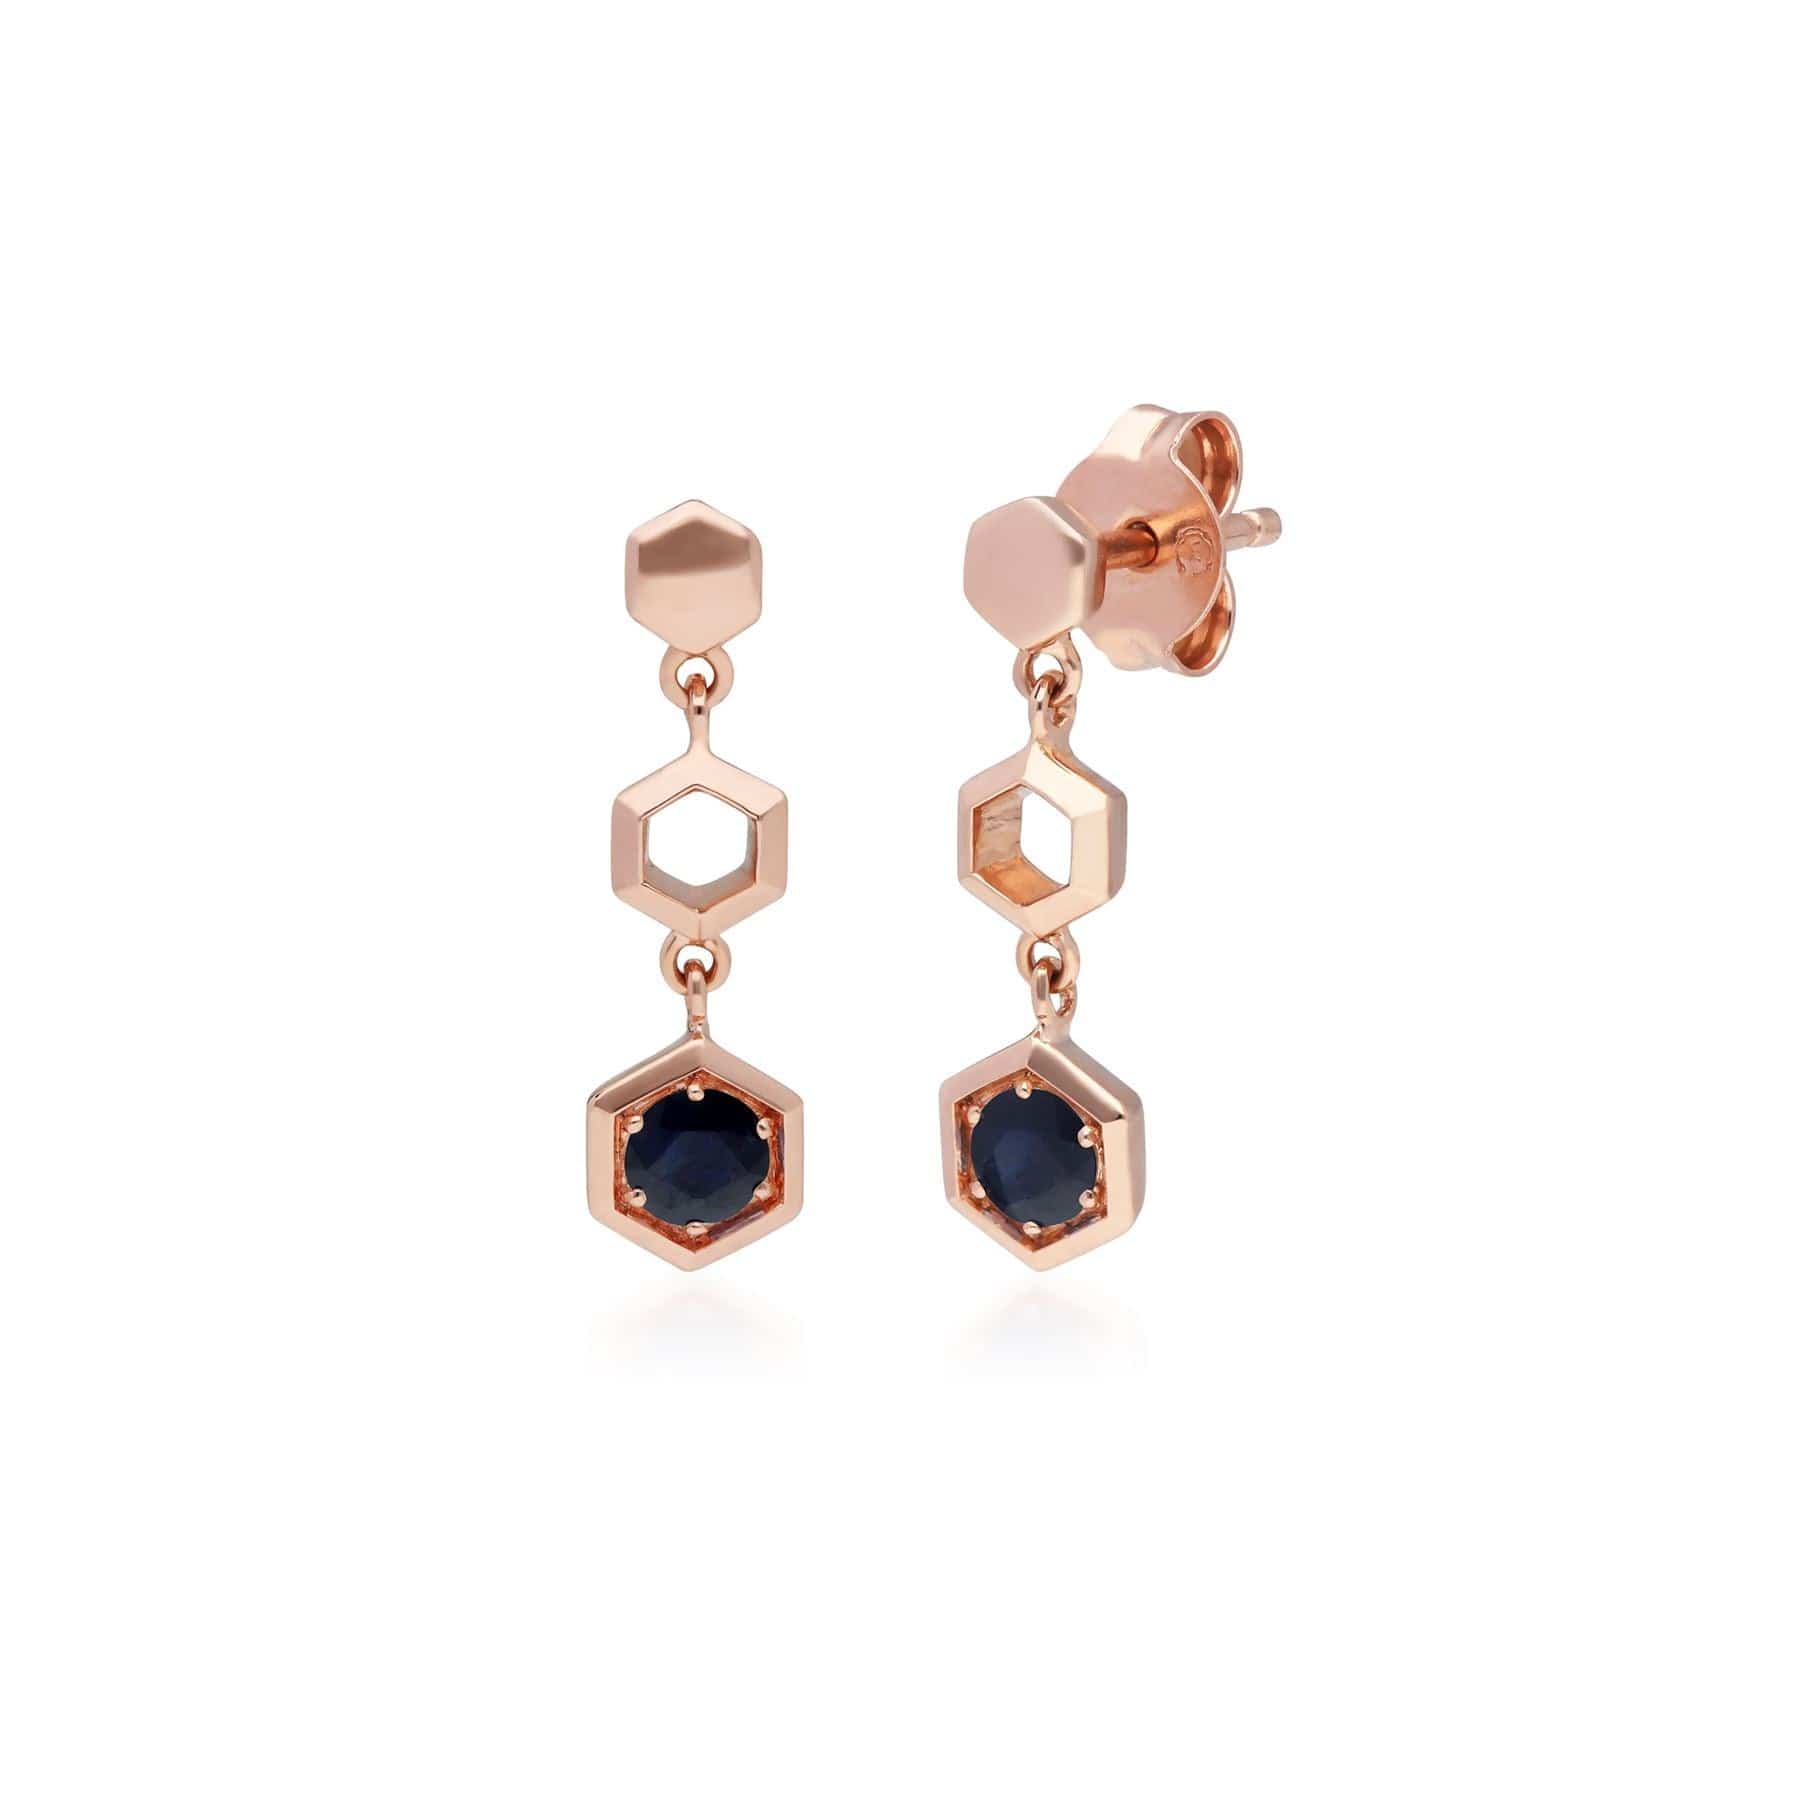 Honeycomb Inspired Blue Sapphire Drop Earrings in 9ct Rose Gold - Gemondo